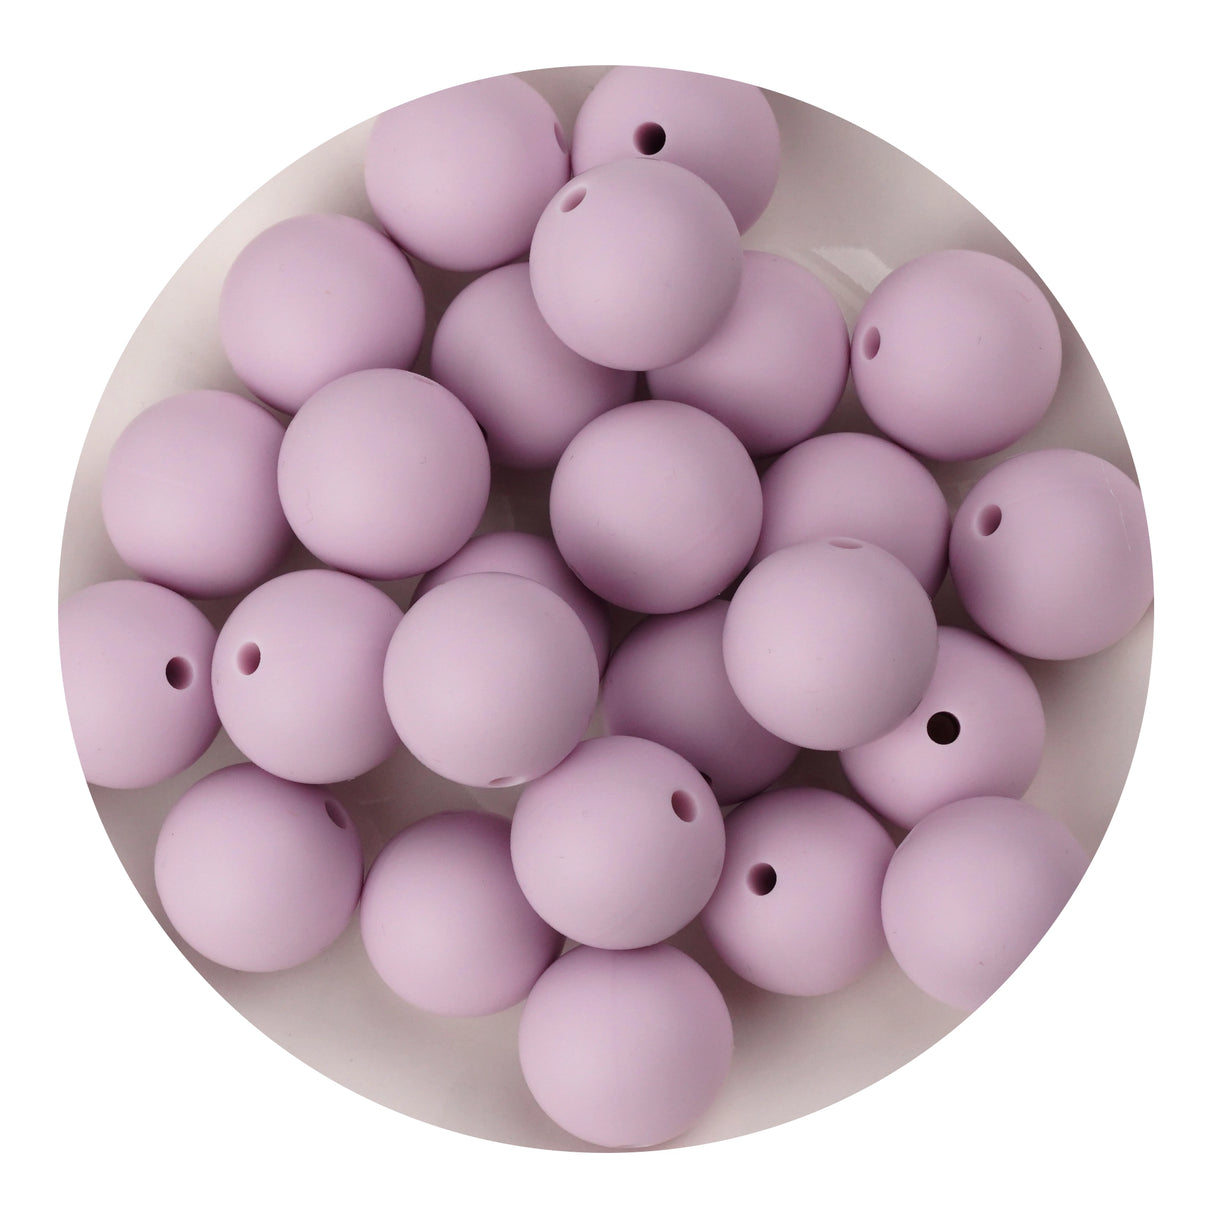 silicone bead round lilac purple